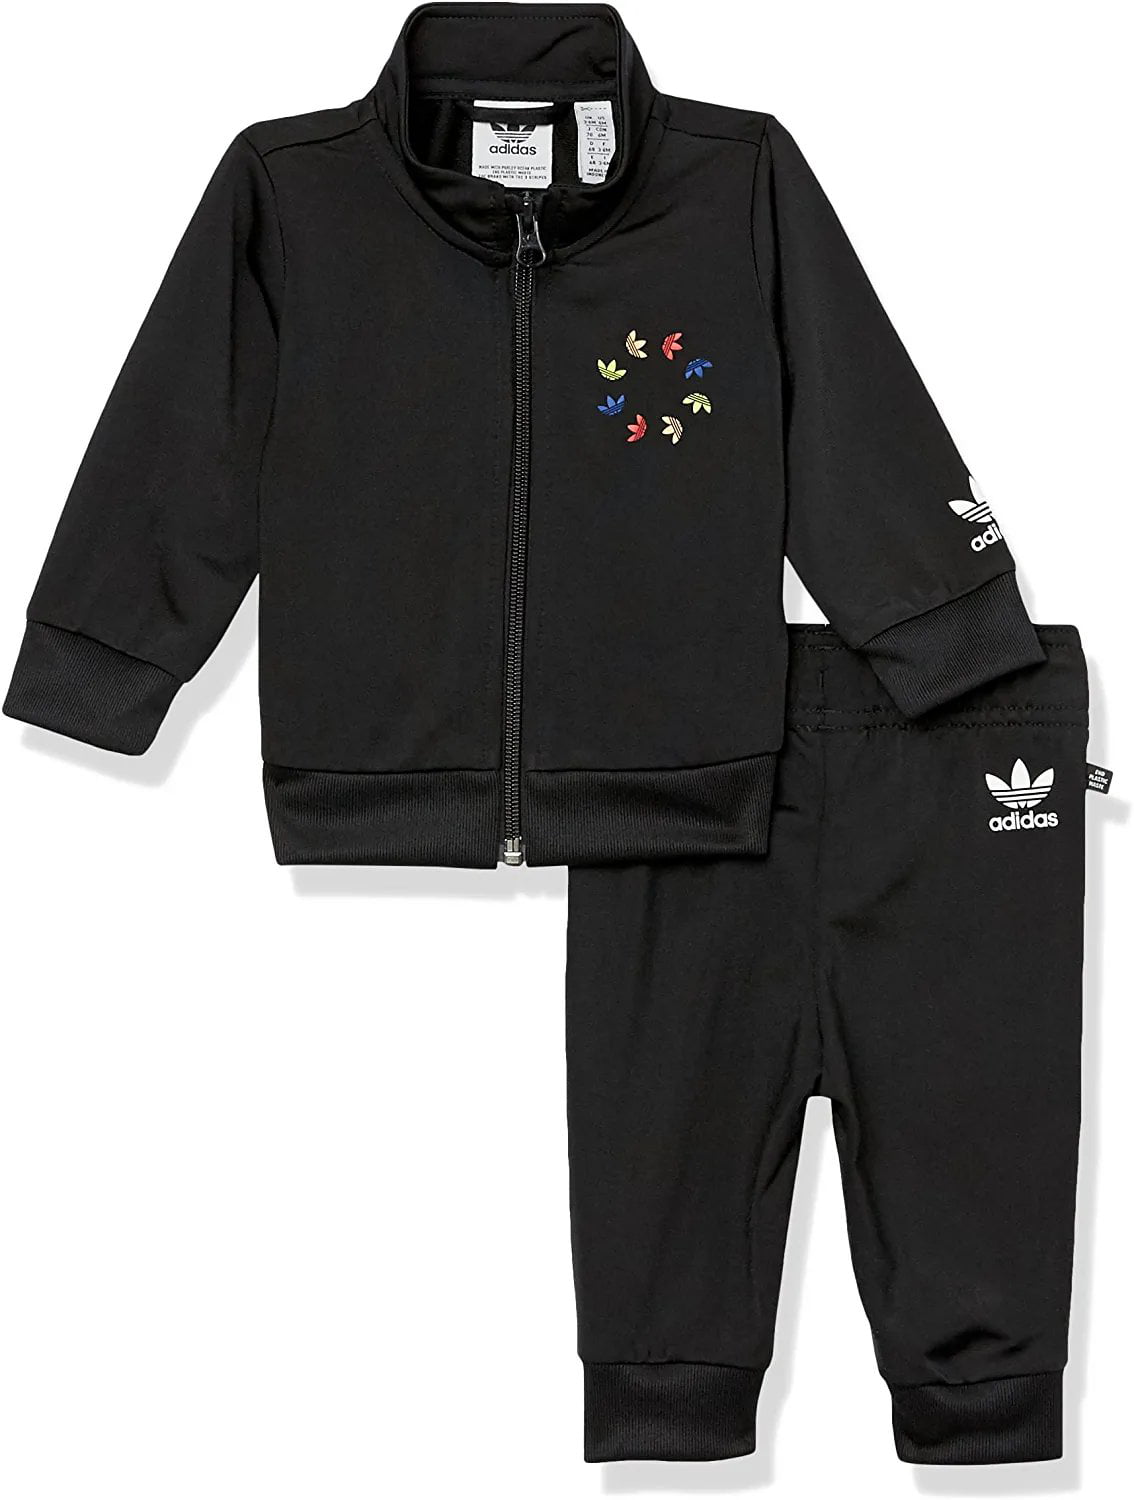 Superioridad monitor Karu Adidas Originals Unisex-Baby Adicolor Track Suit, Black, 6 Months -  Walmart.com